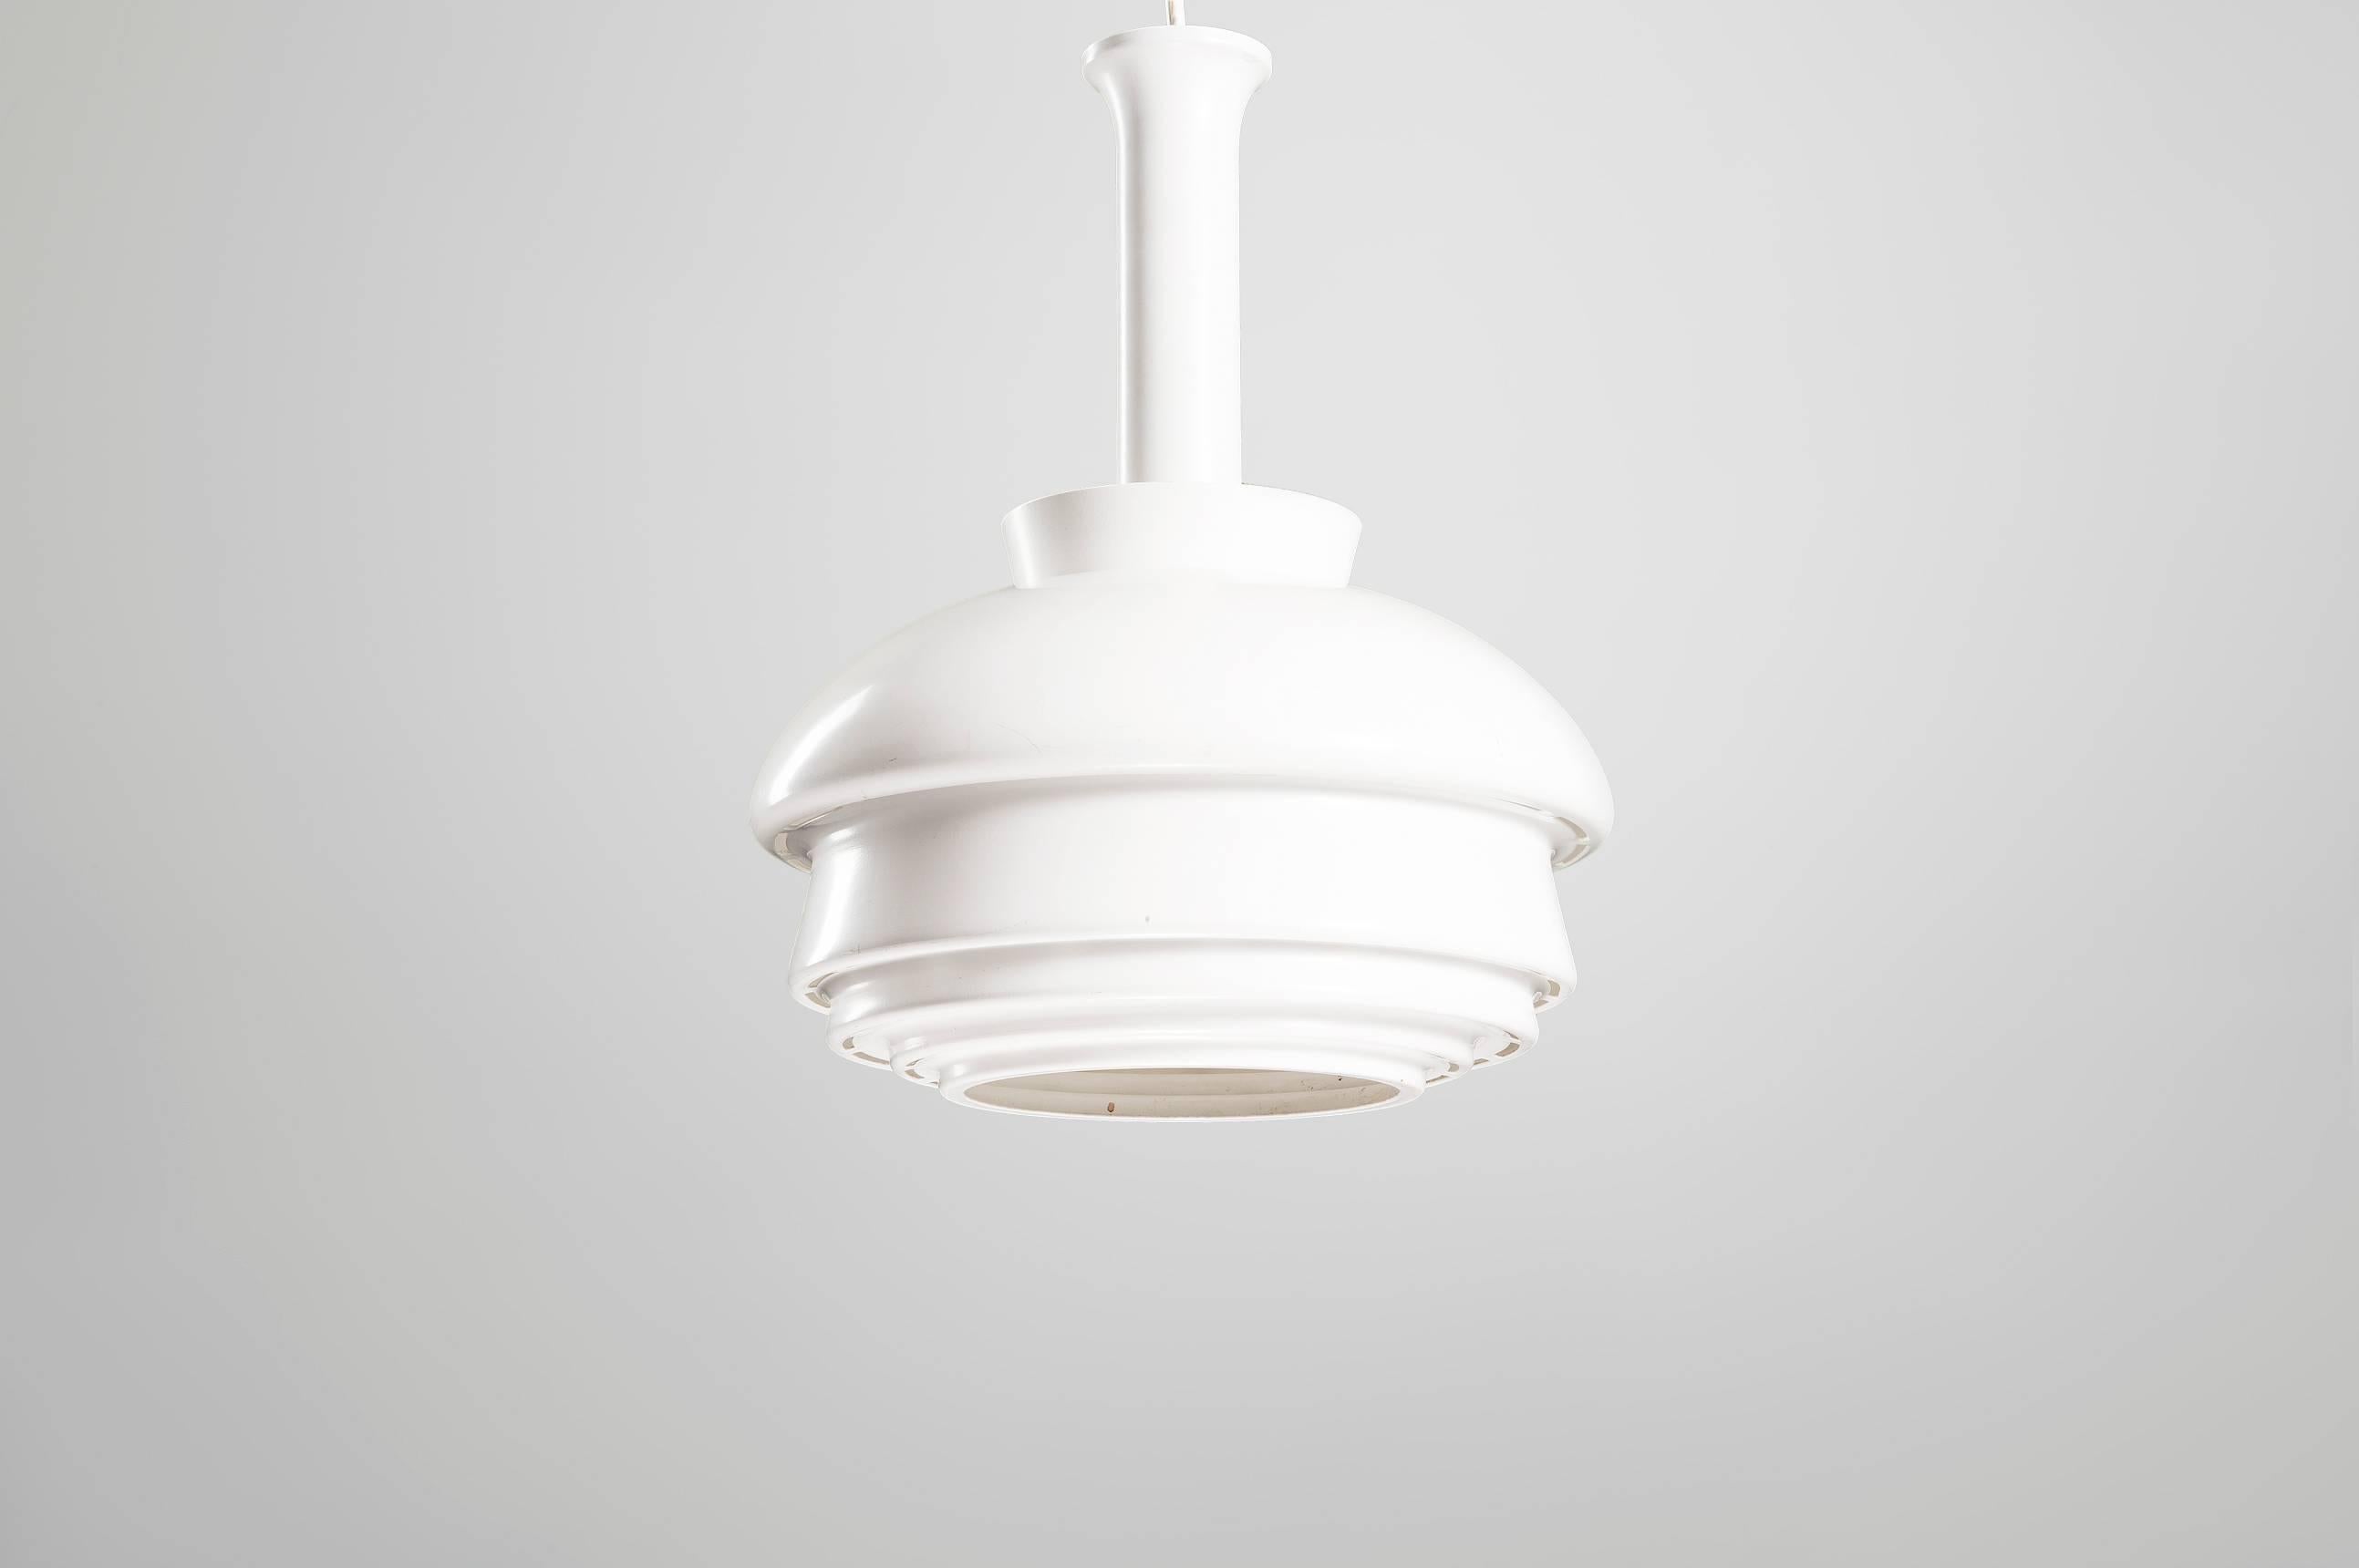 Ceiling lamp model “A 335”.
Manufactured by Artek,
Finland, 1956.
White painted metal.
Mid- century Finnish // Nordic Chandelier
Measurement
40 cm height,
15,7 in height.

Literature:
Alvar Aalto designer. Alvar Aalto museum.

Provenance:
Private